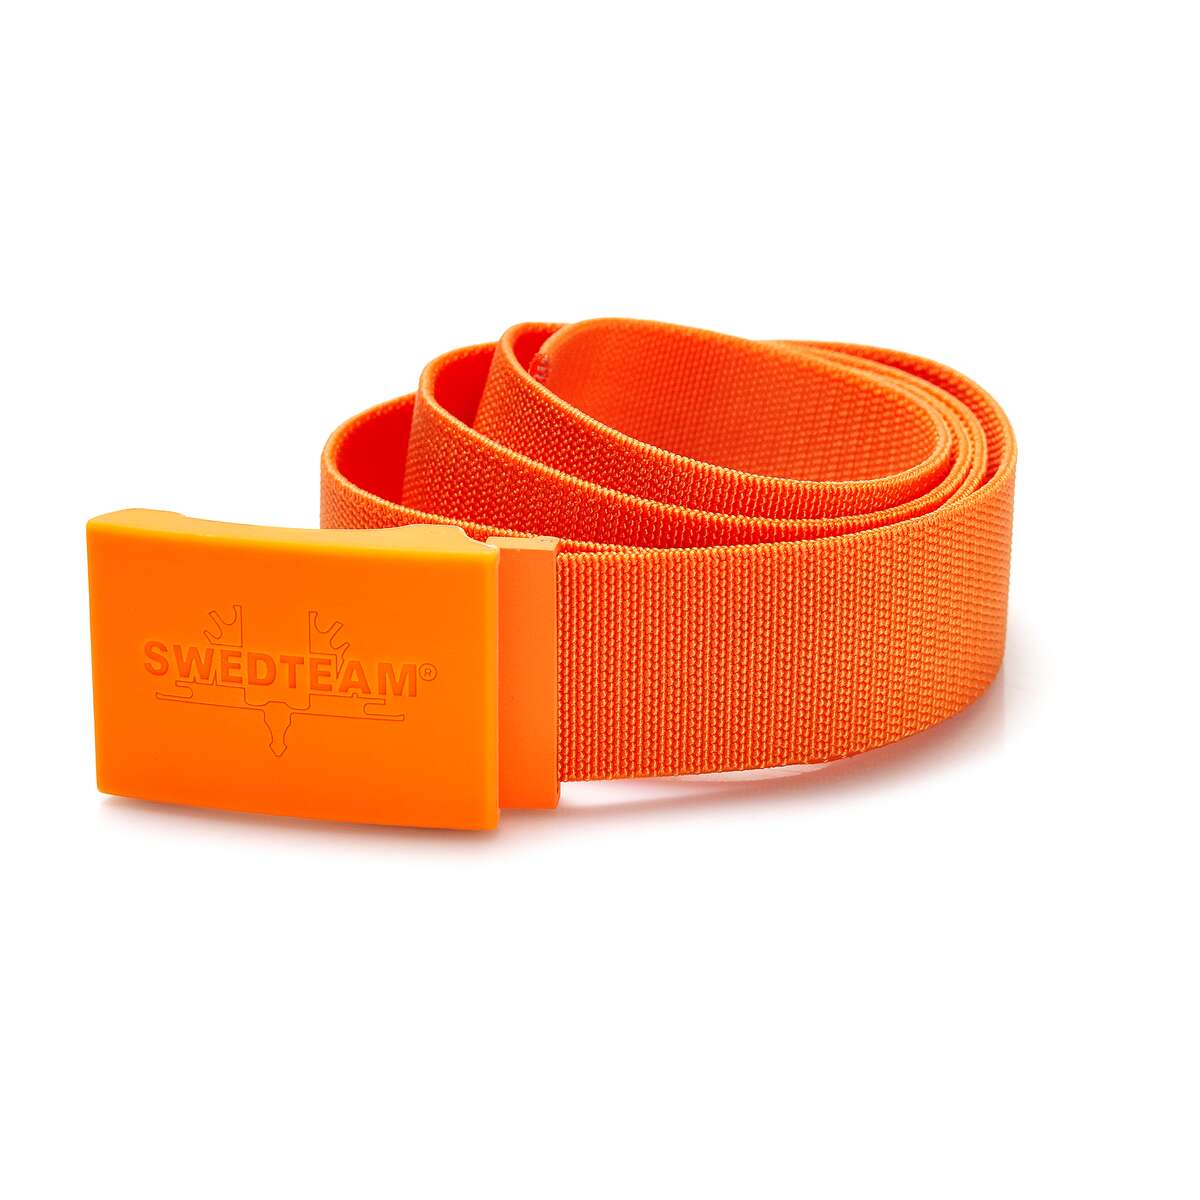 Swedteam Stretch Belte orange one size